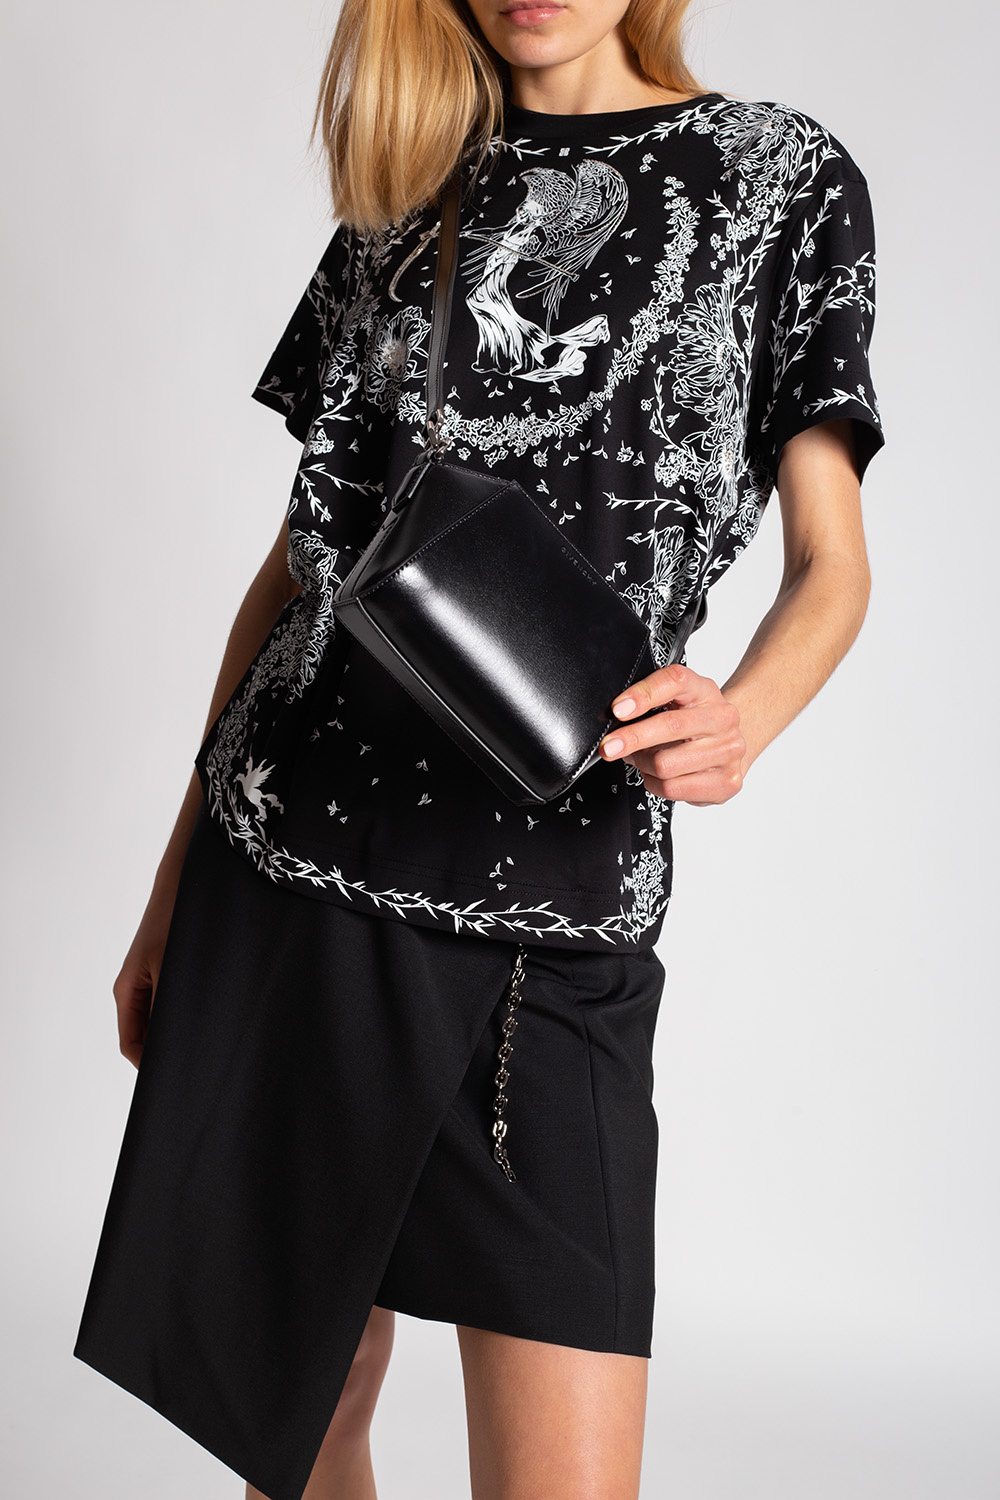 Givenchy Antigona Nano Zip Satchel Bag